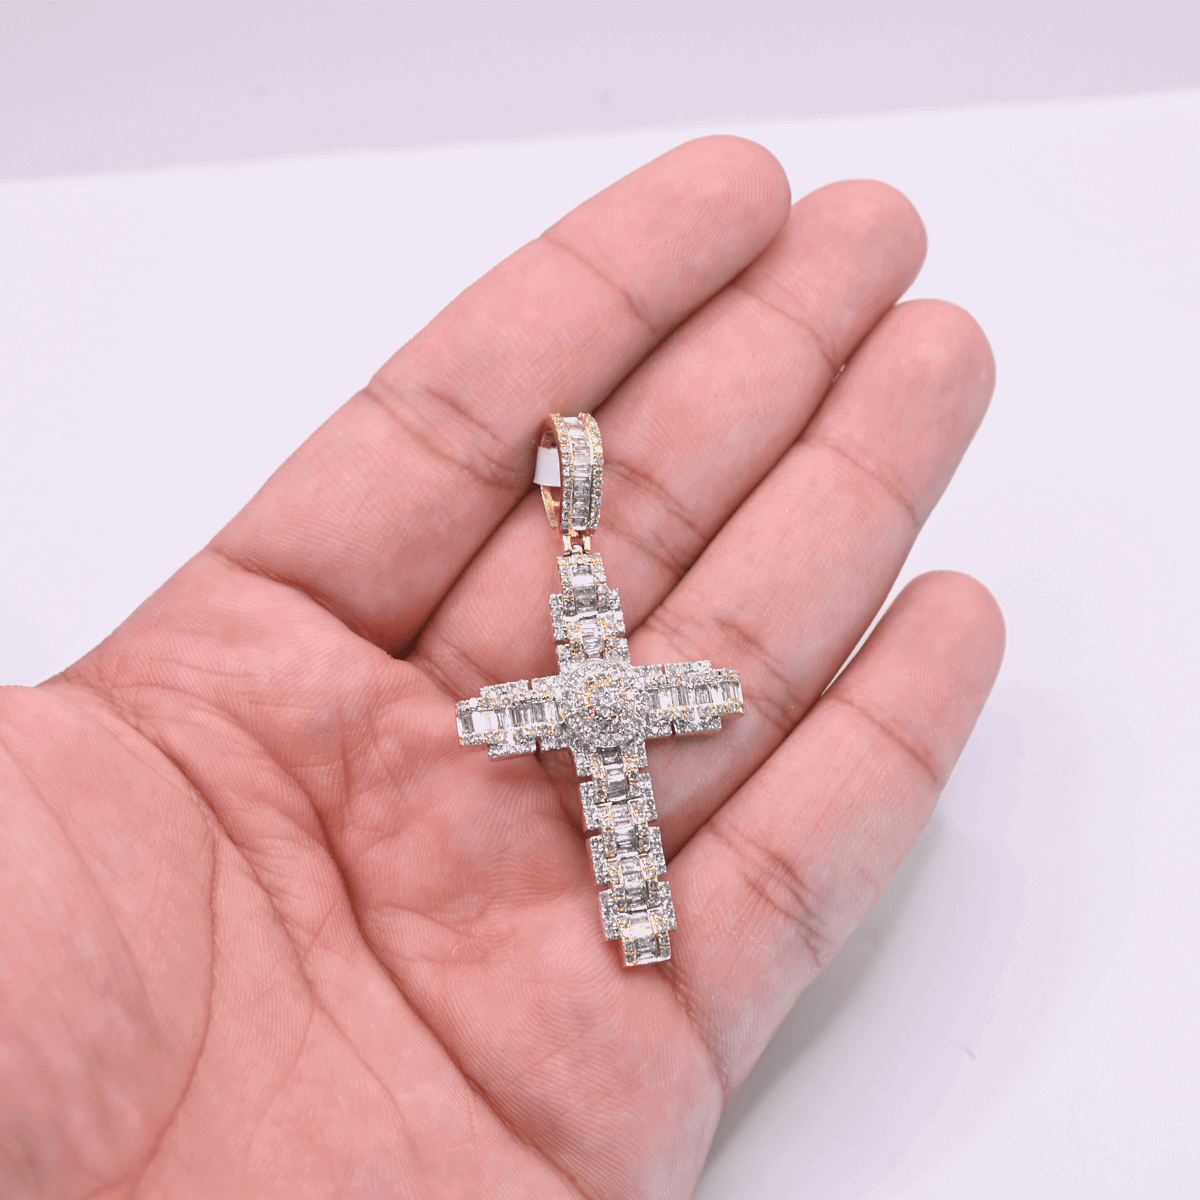 10K Cross Gold Diamond Pendant